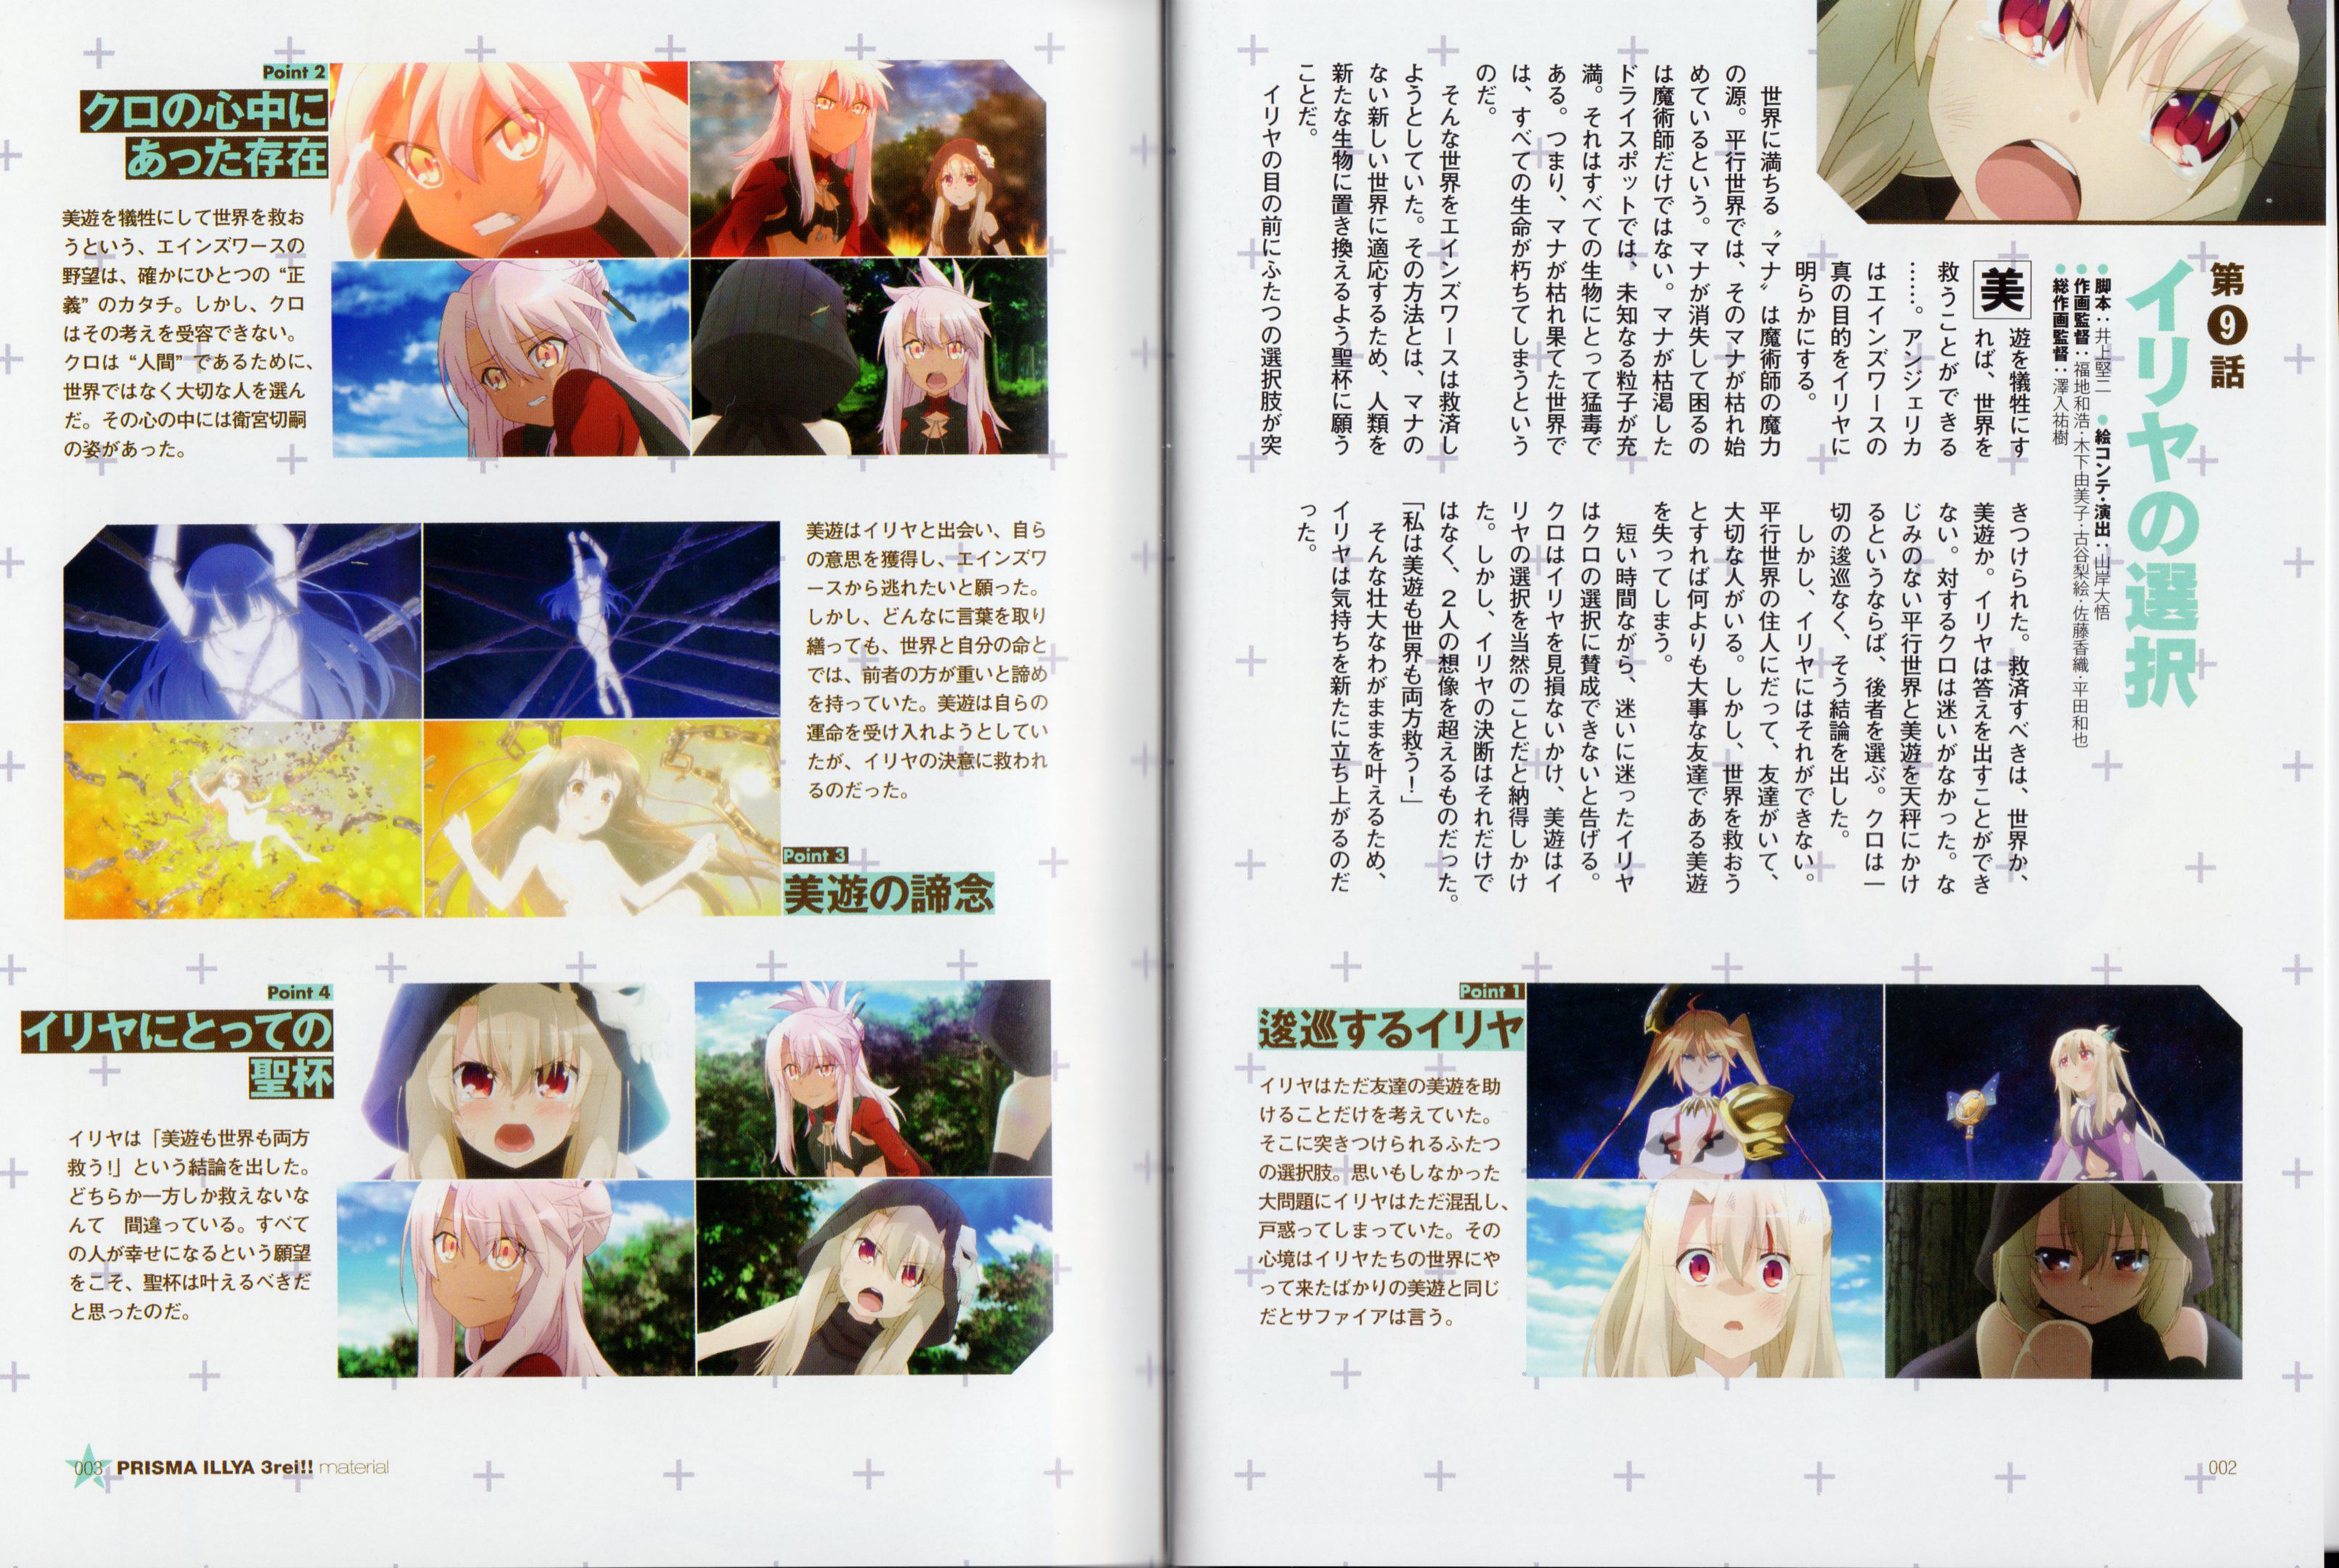 Fate/kaleid liner Prisma ☆ Ilya dry! BD vol. 5 "award animation Nightgown of Erica! reveal a kinky night dolls of sleeping! 」 118